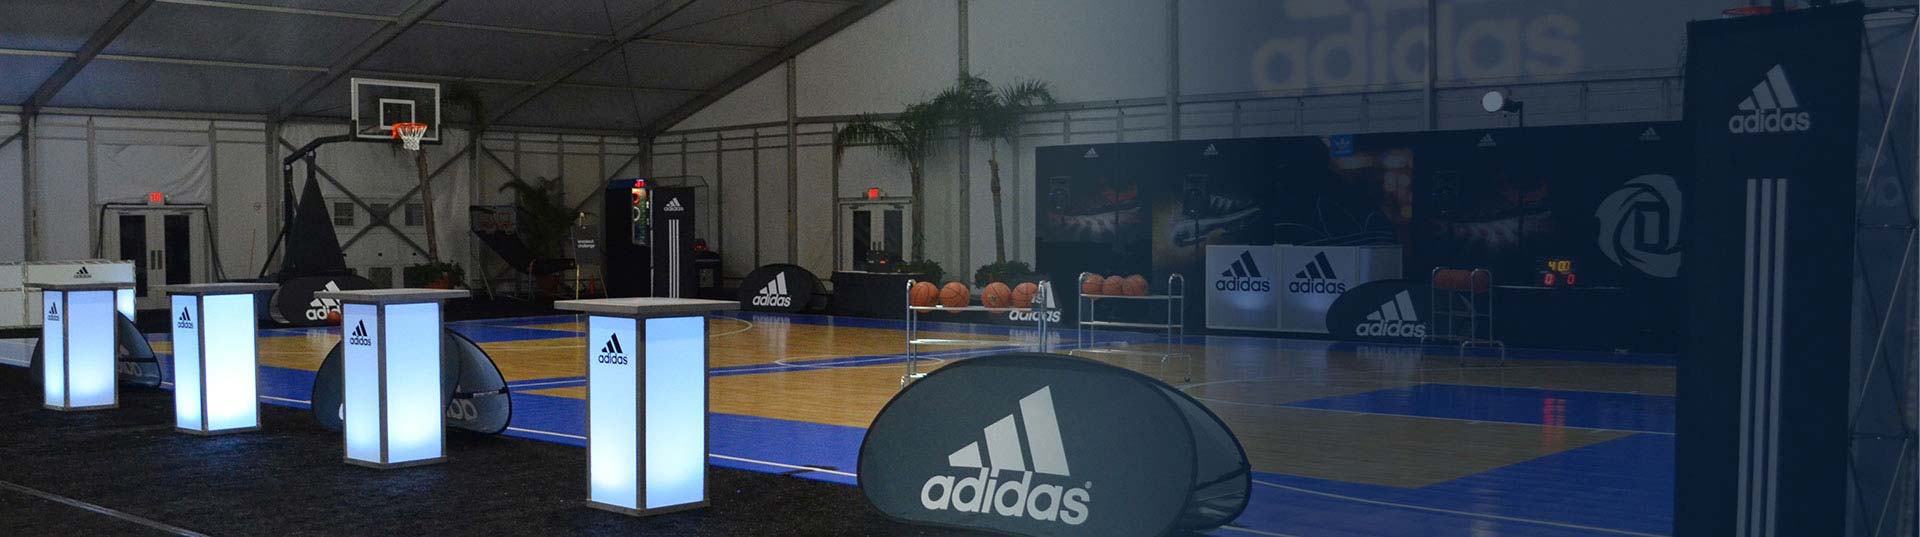 adidas engagement event custom basketball court